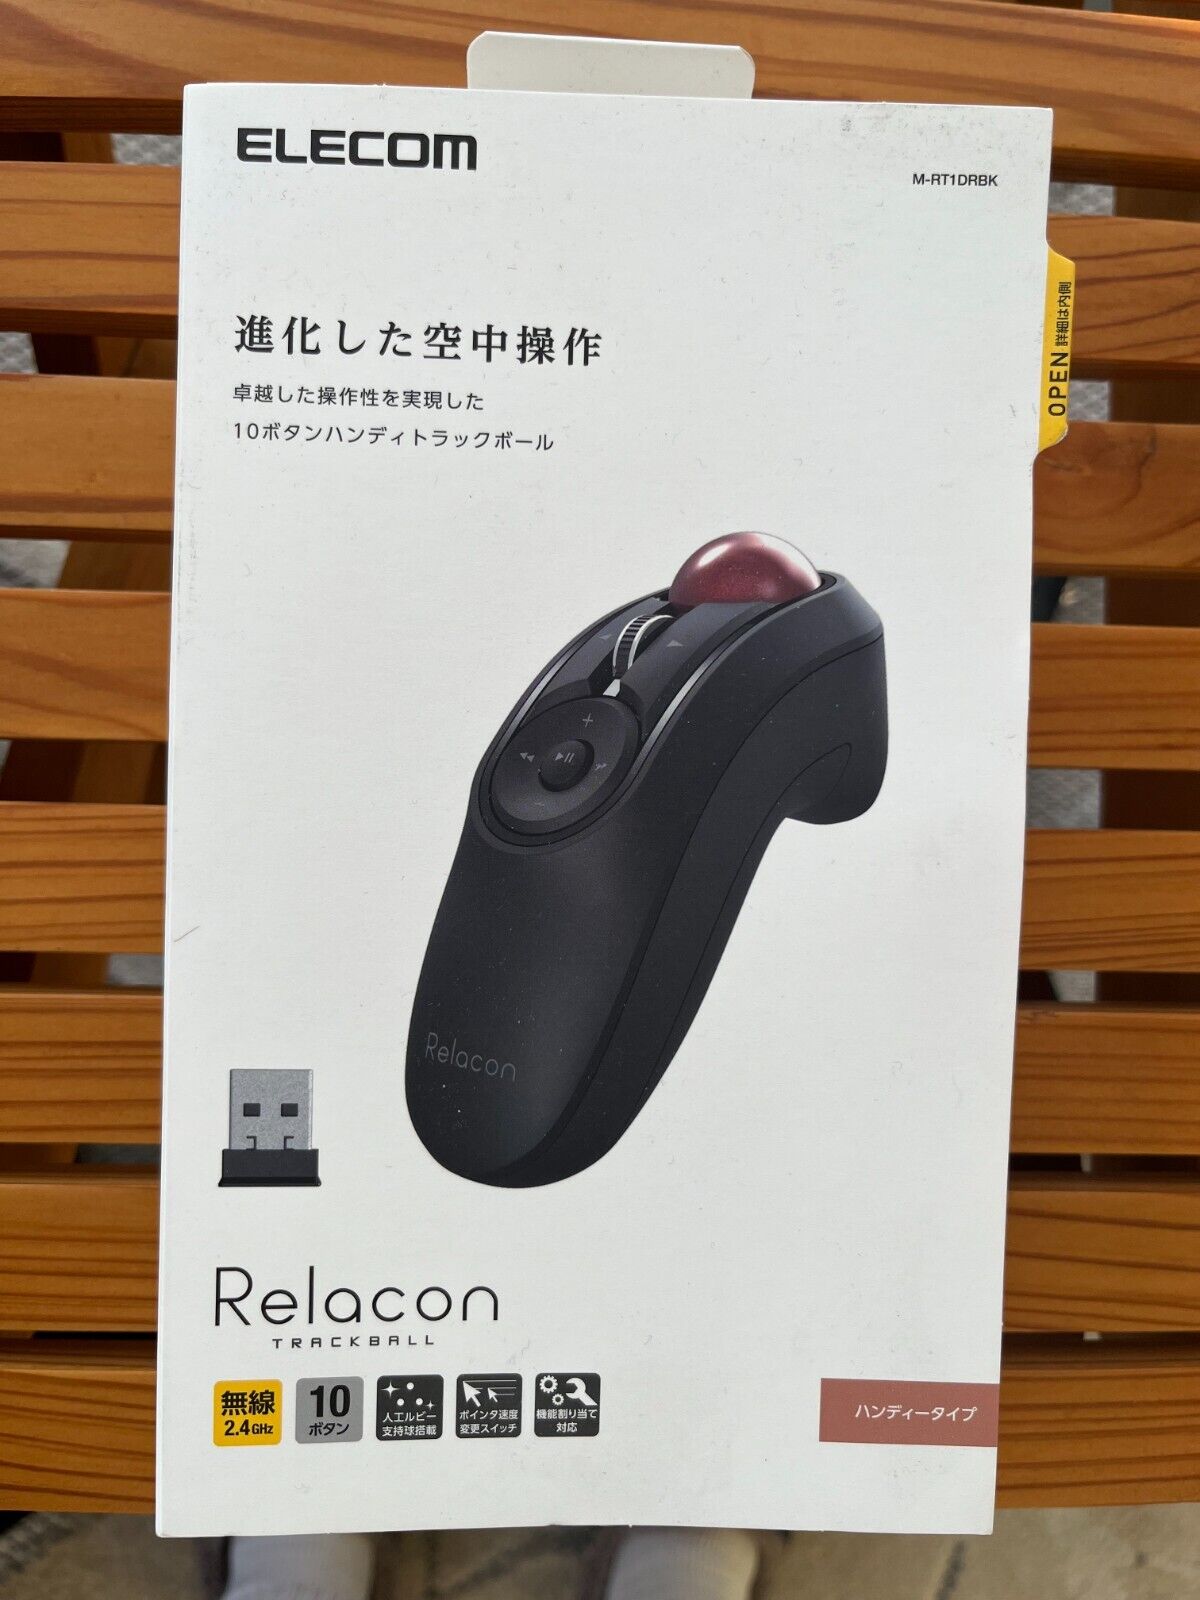 Elecom Relacon Handheld Trackball - M-RT1DRBK...BRAND NEW